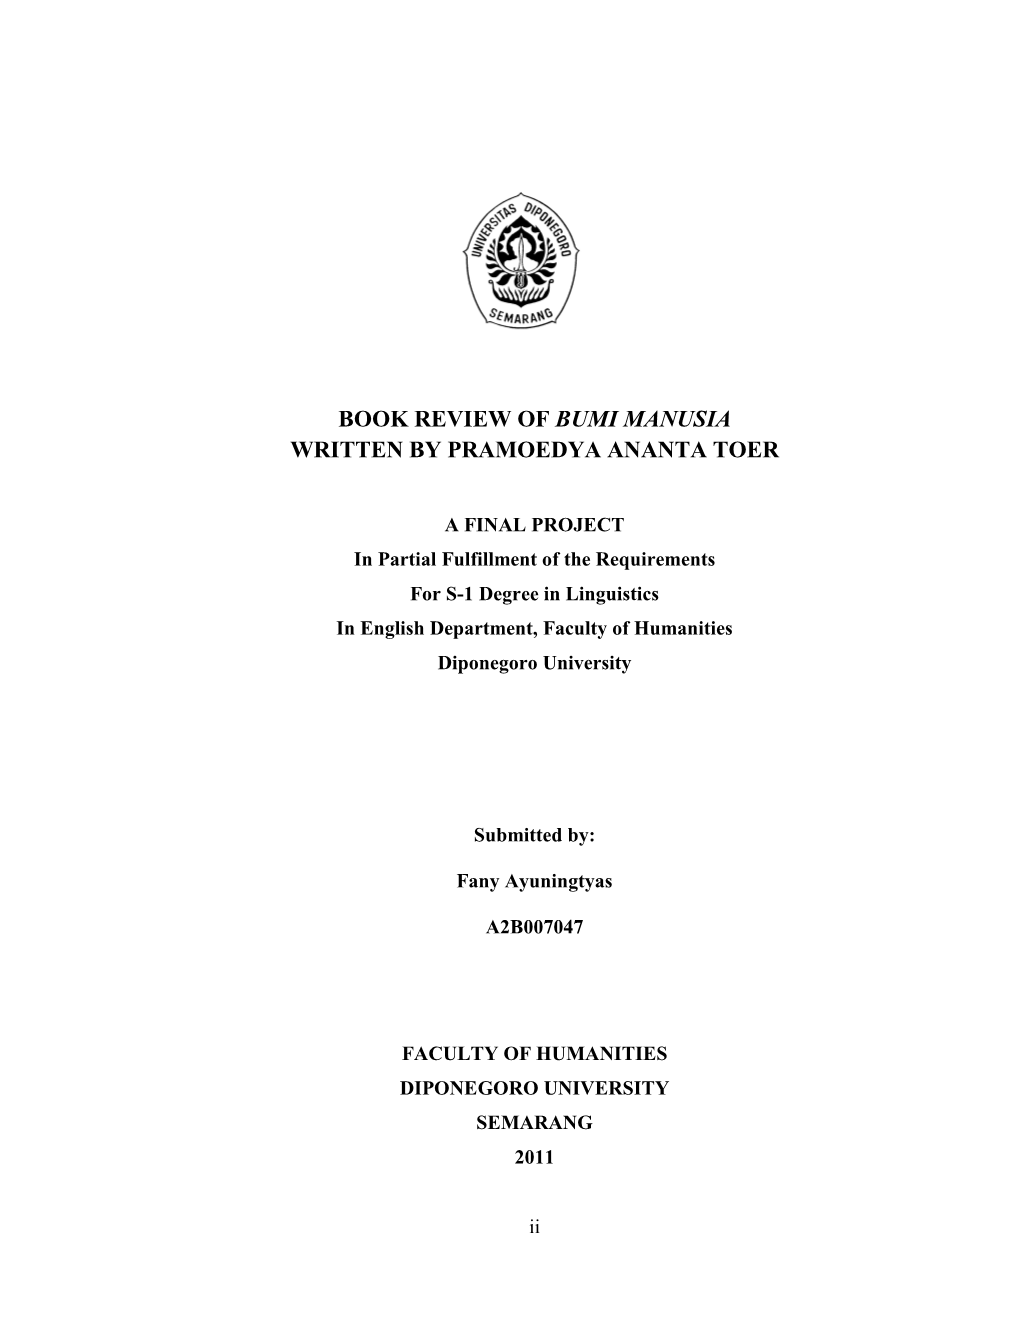 Book Review of Bumi Manusia Written by Pramoedya Ananta Toer